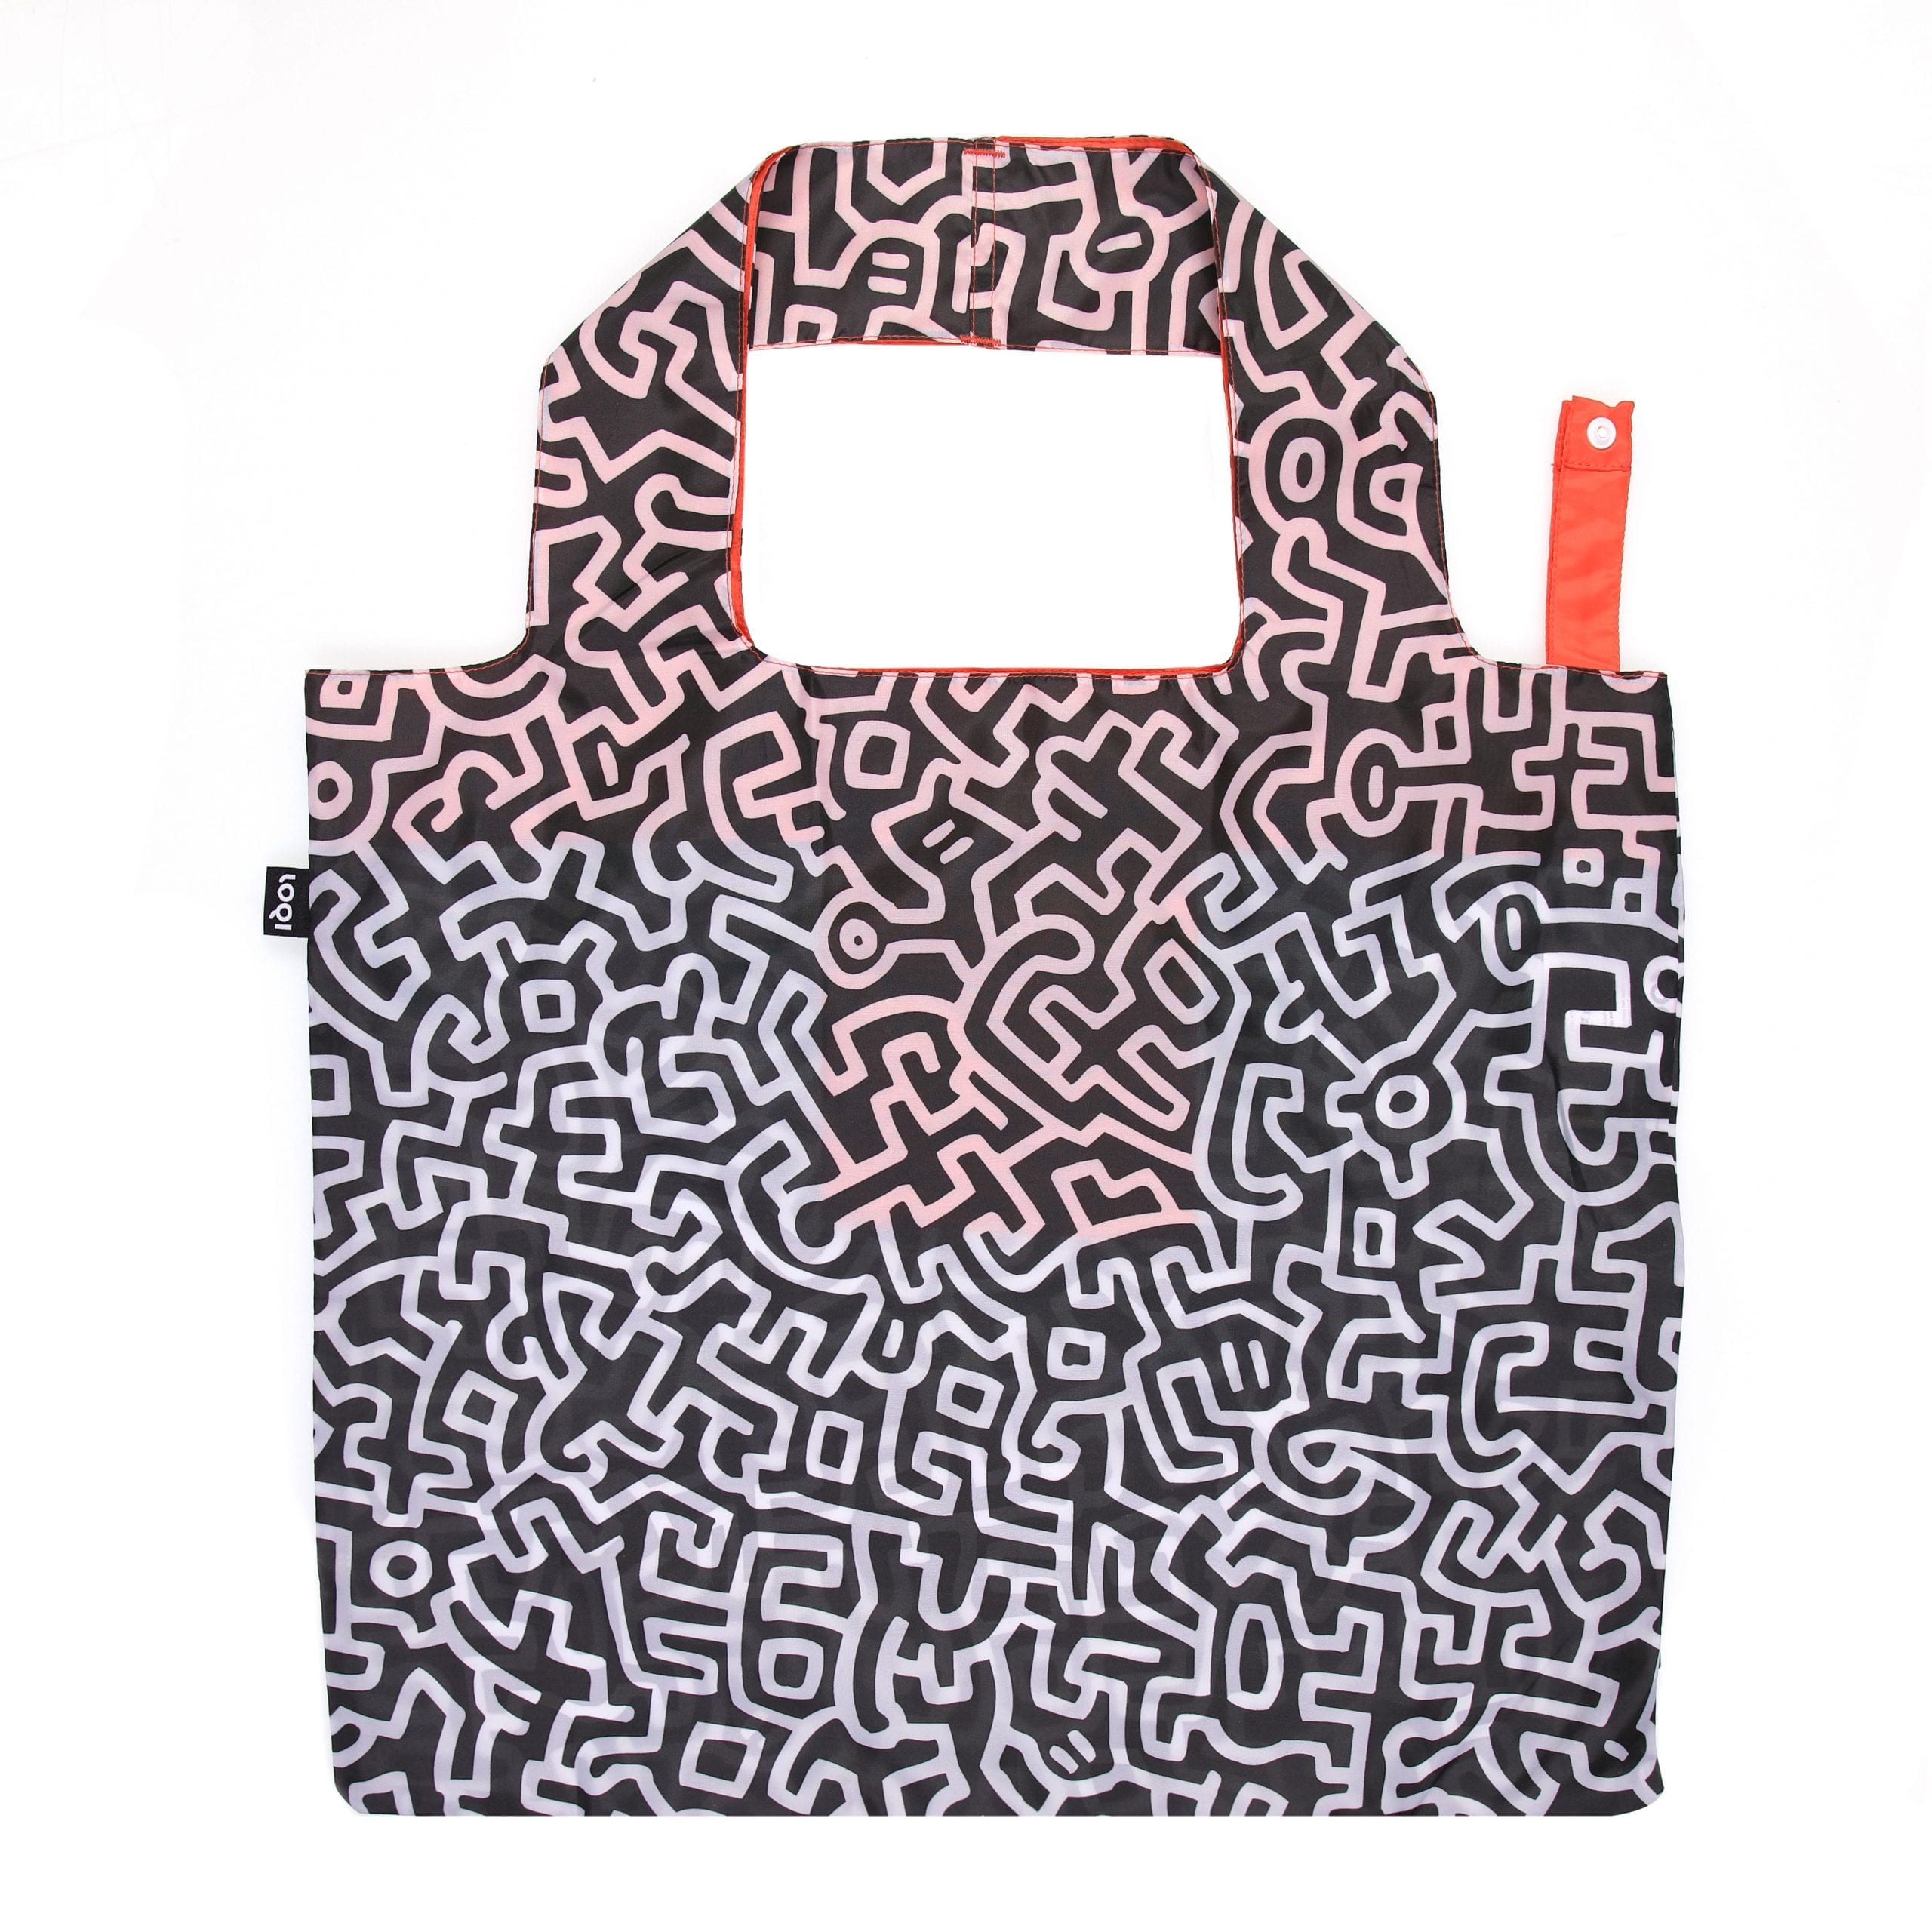 Loqi bag. Keith Haring - Untitled